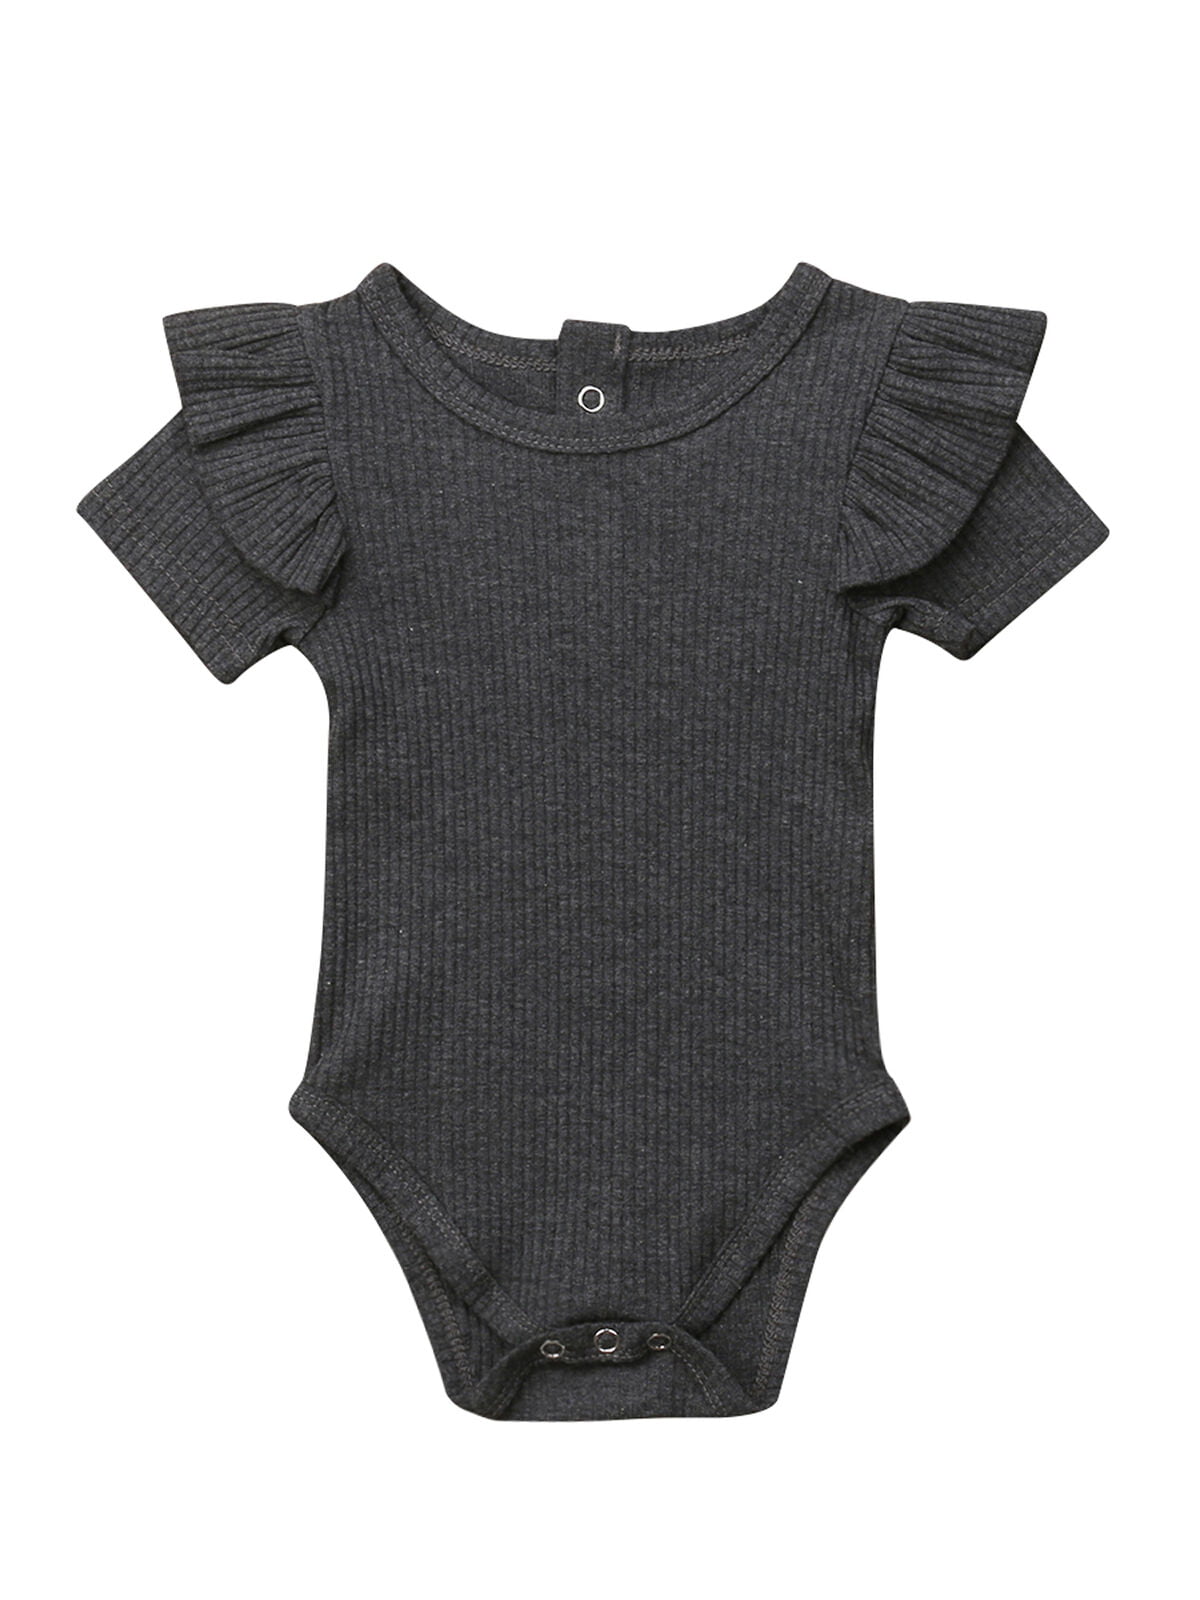 Newborn Toddler Baby Boys Girls Solid Ruffle Romper Tops Bodysuit Summer Clothes